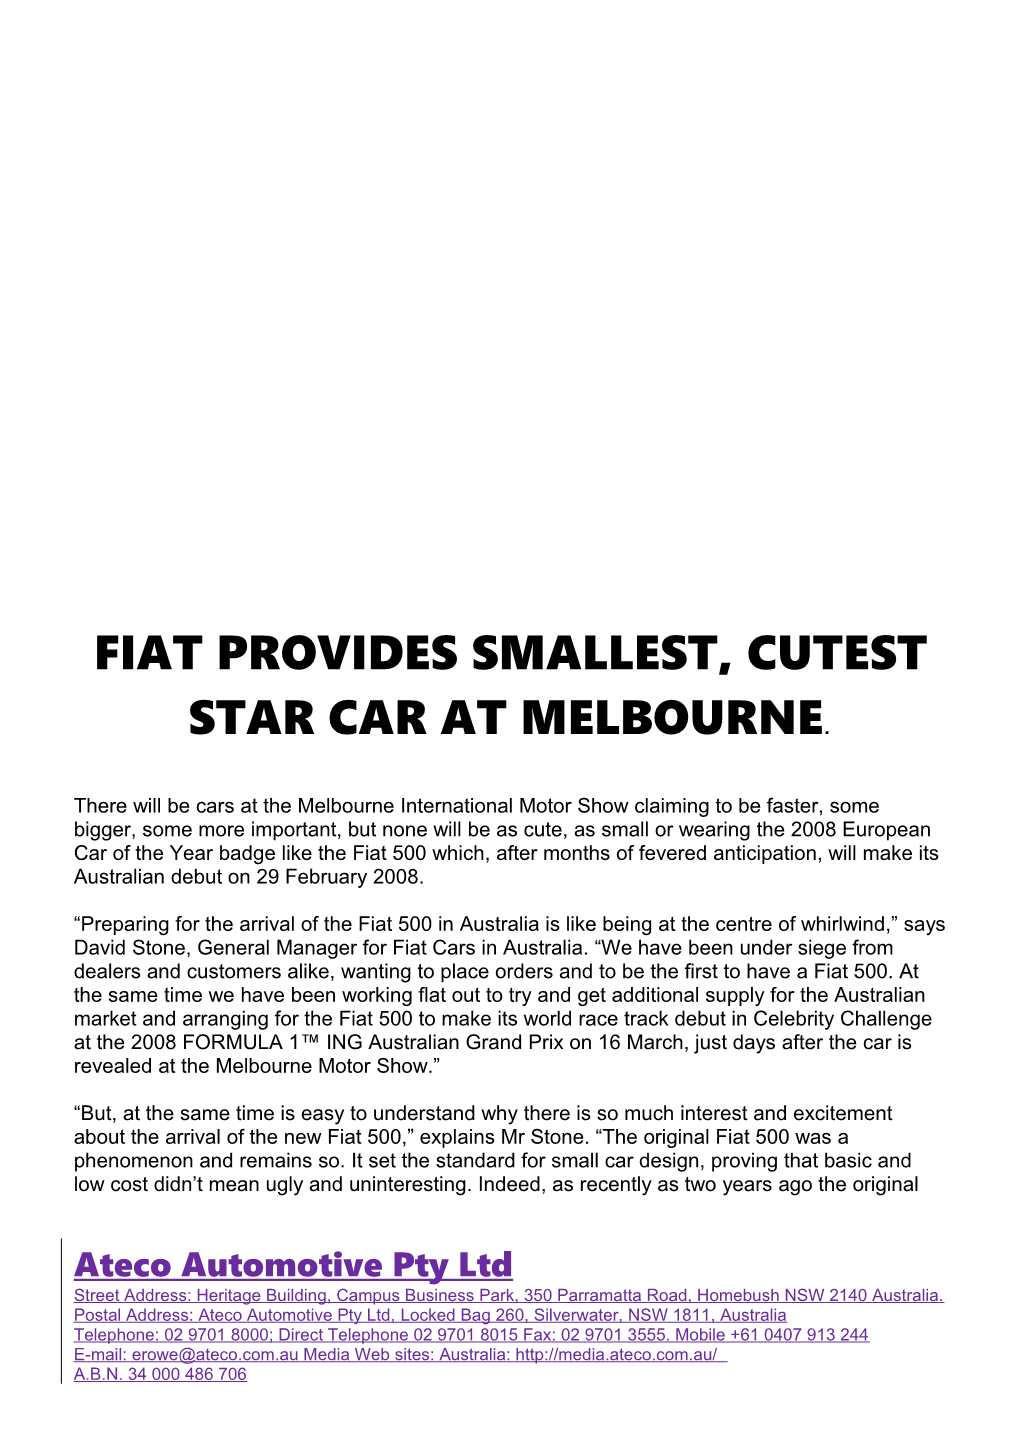 Fiat Provides Smallest, Cutest Star Car at Melbourne